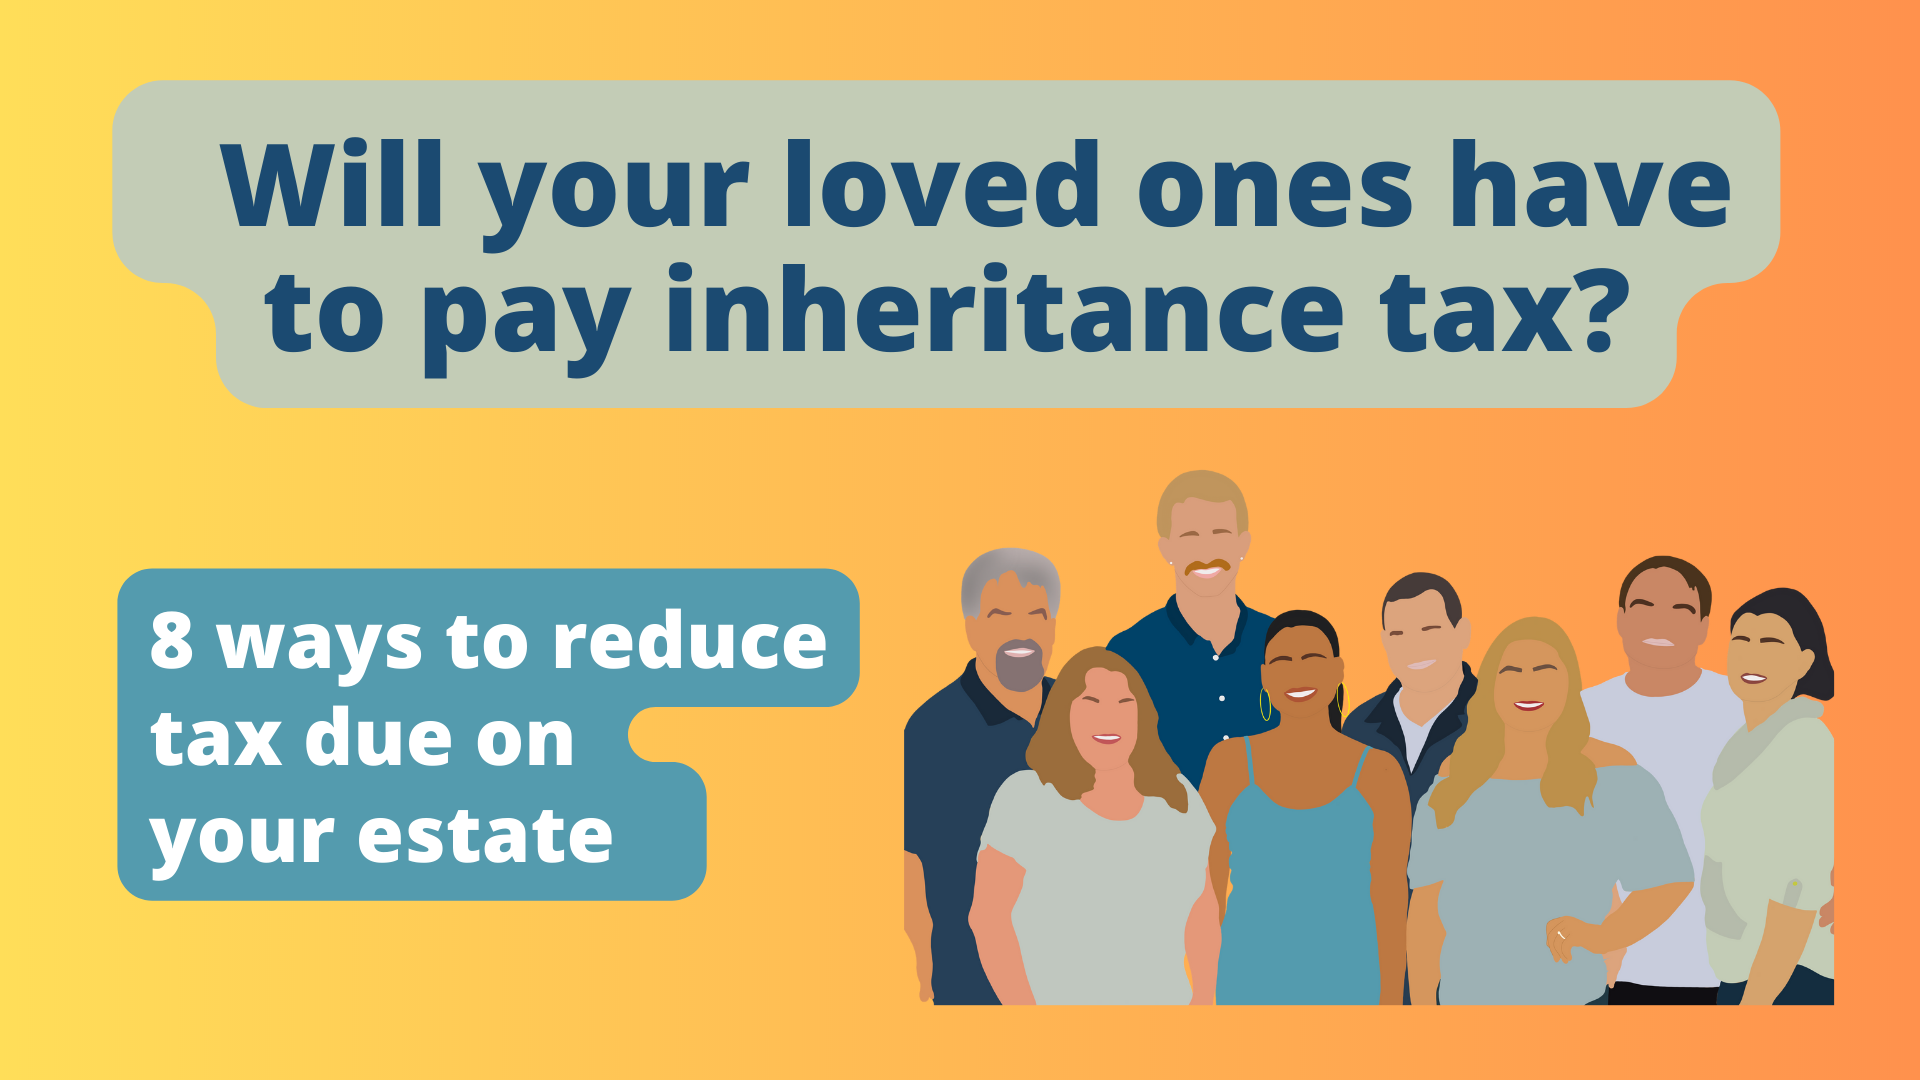 8 ways to reduce the inheritance tax